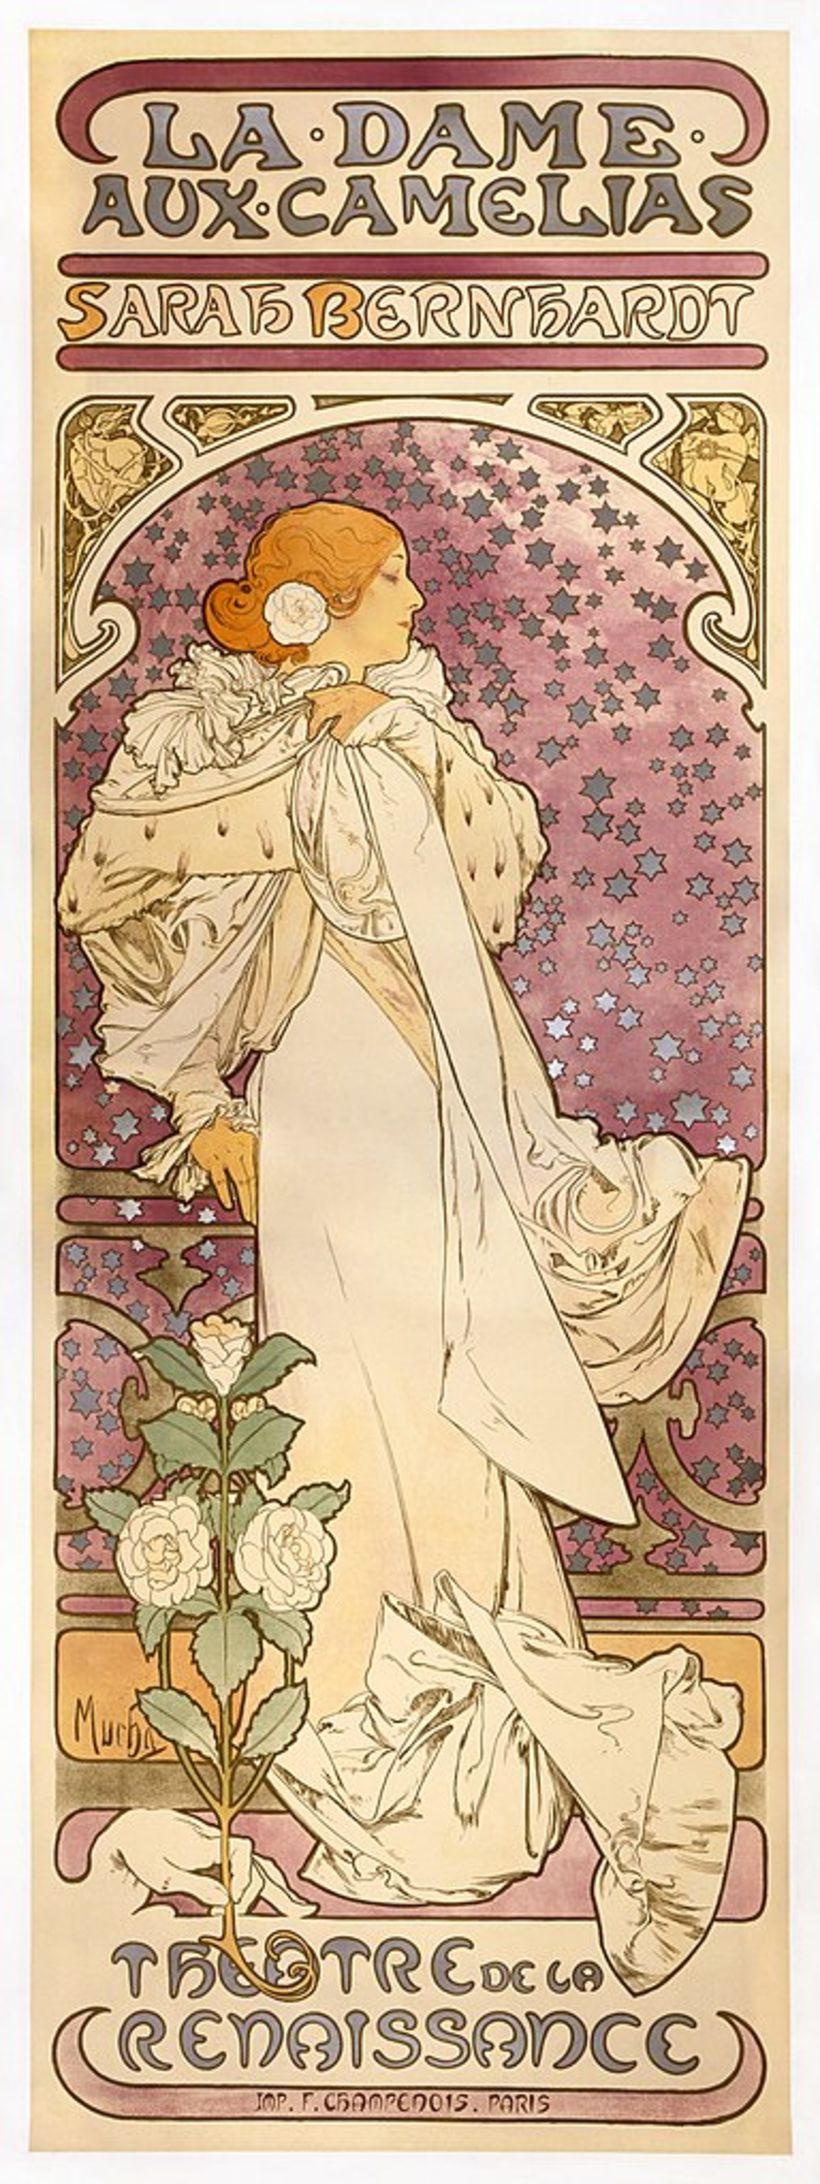 Póster para "La Tosca" con Sarah Bernhardt (1898)